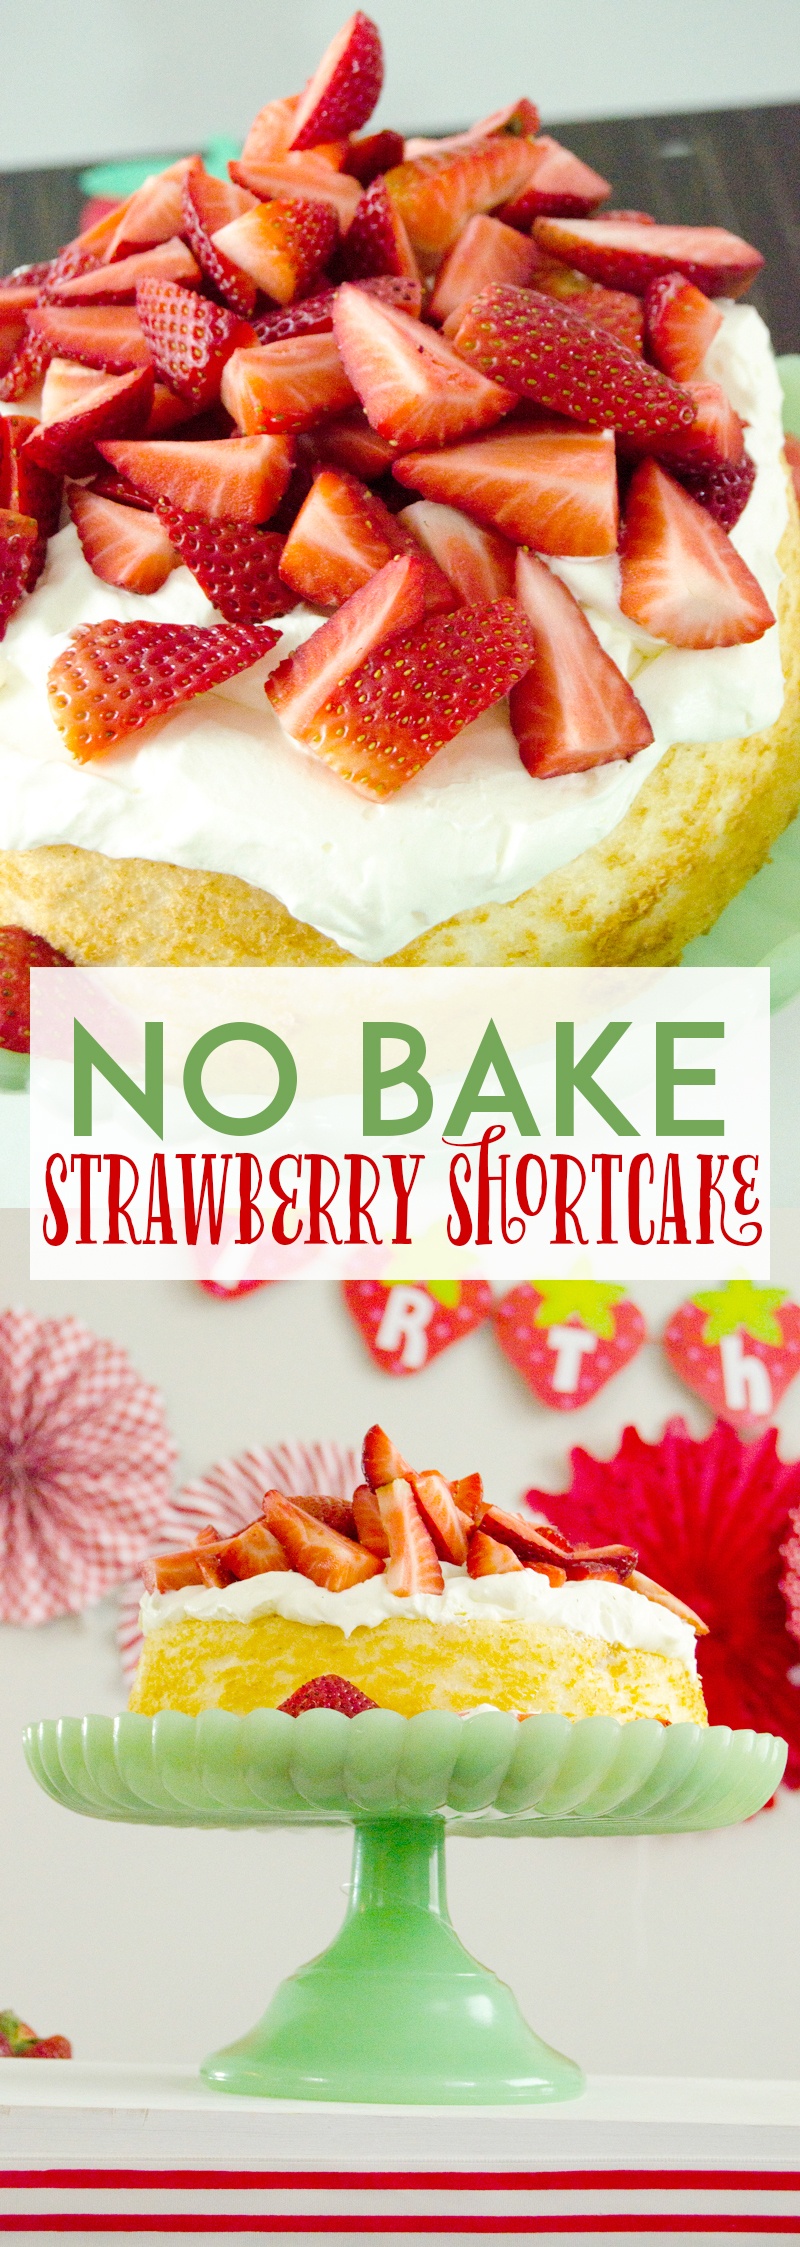 No Bake Strawberry Shortcake by Lindi Haws of Love The Day